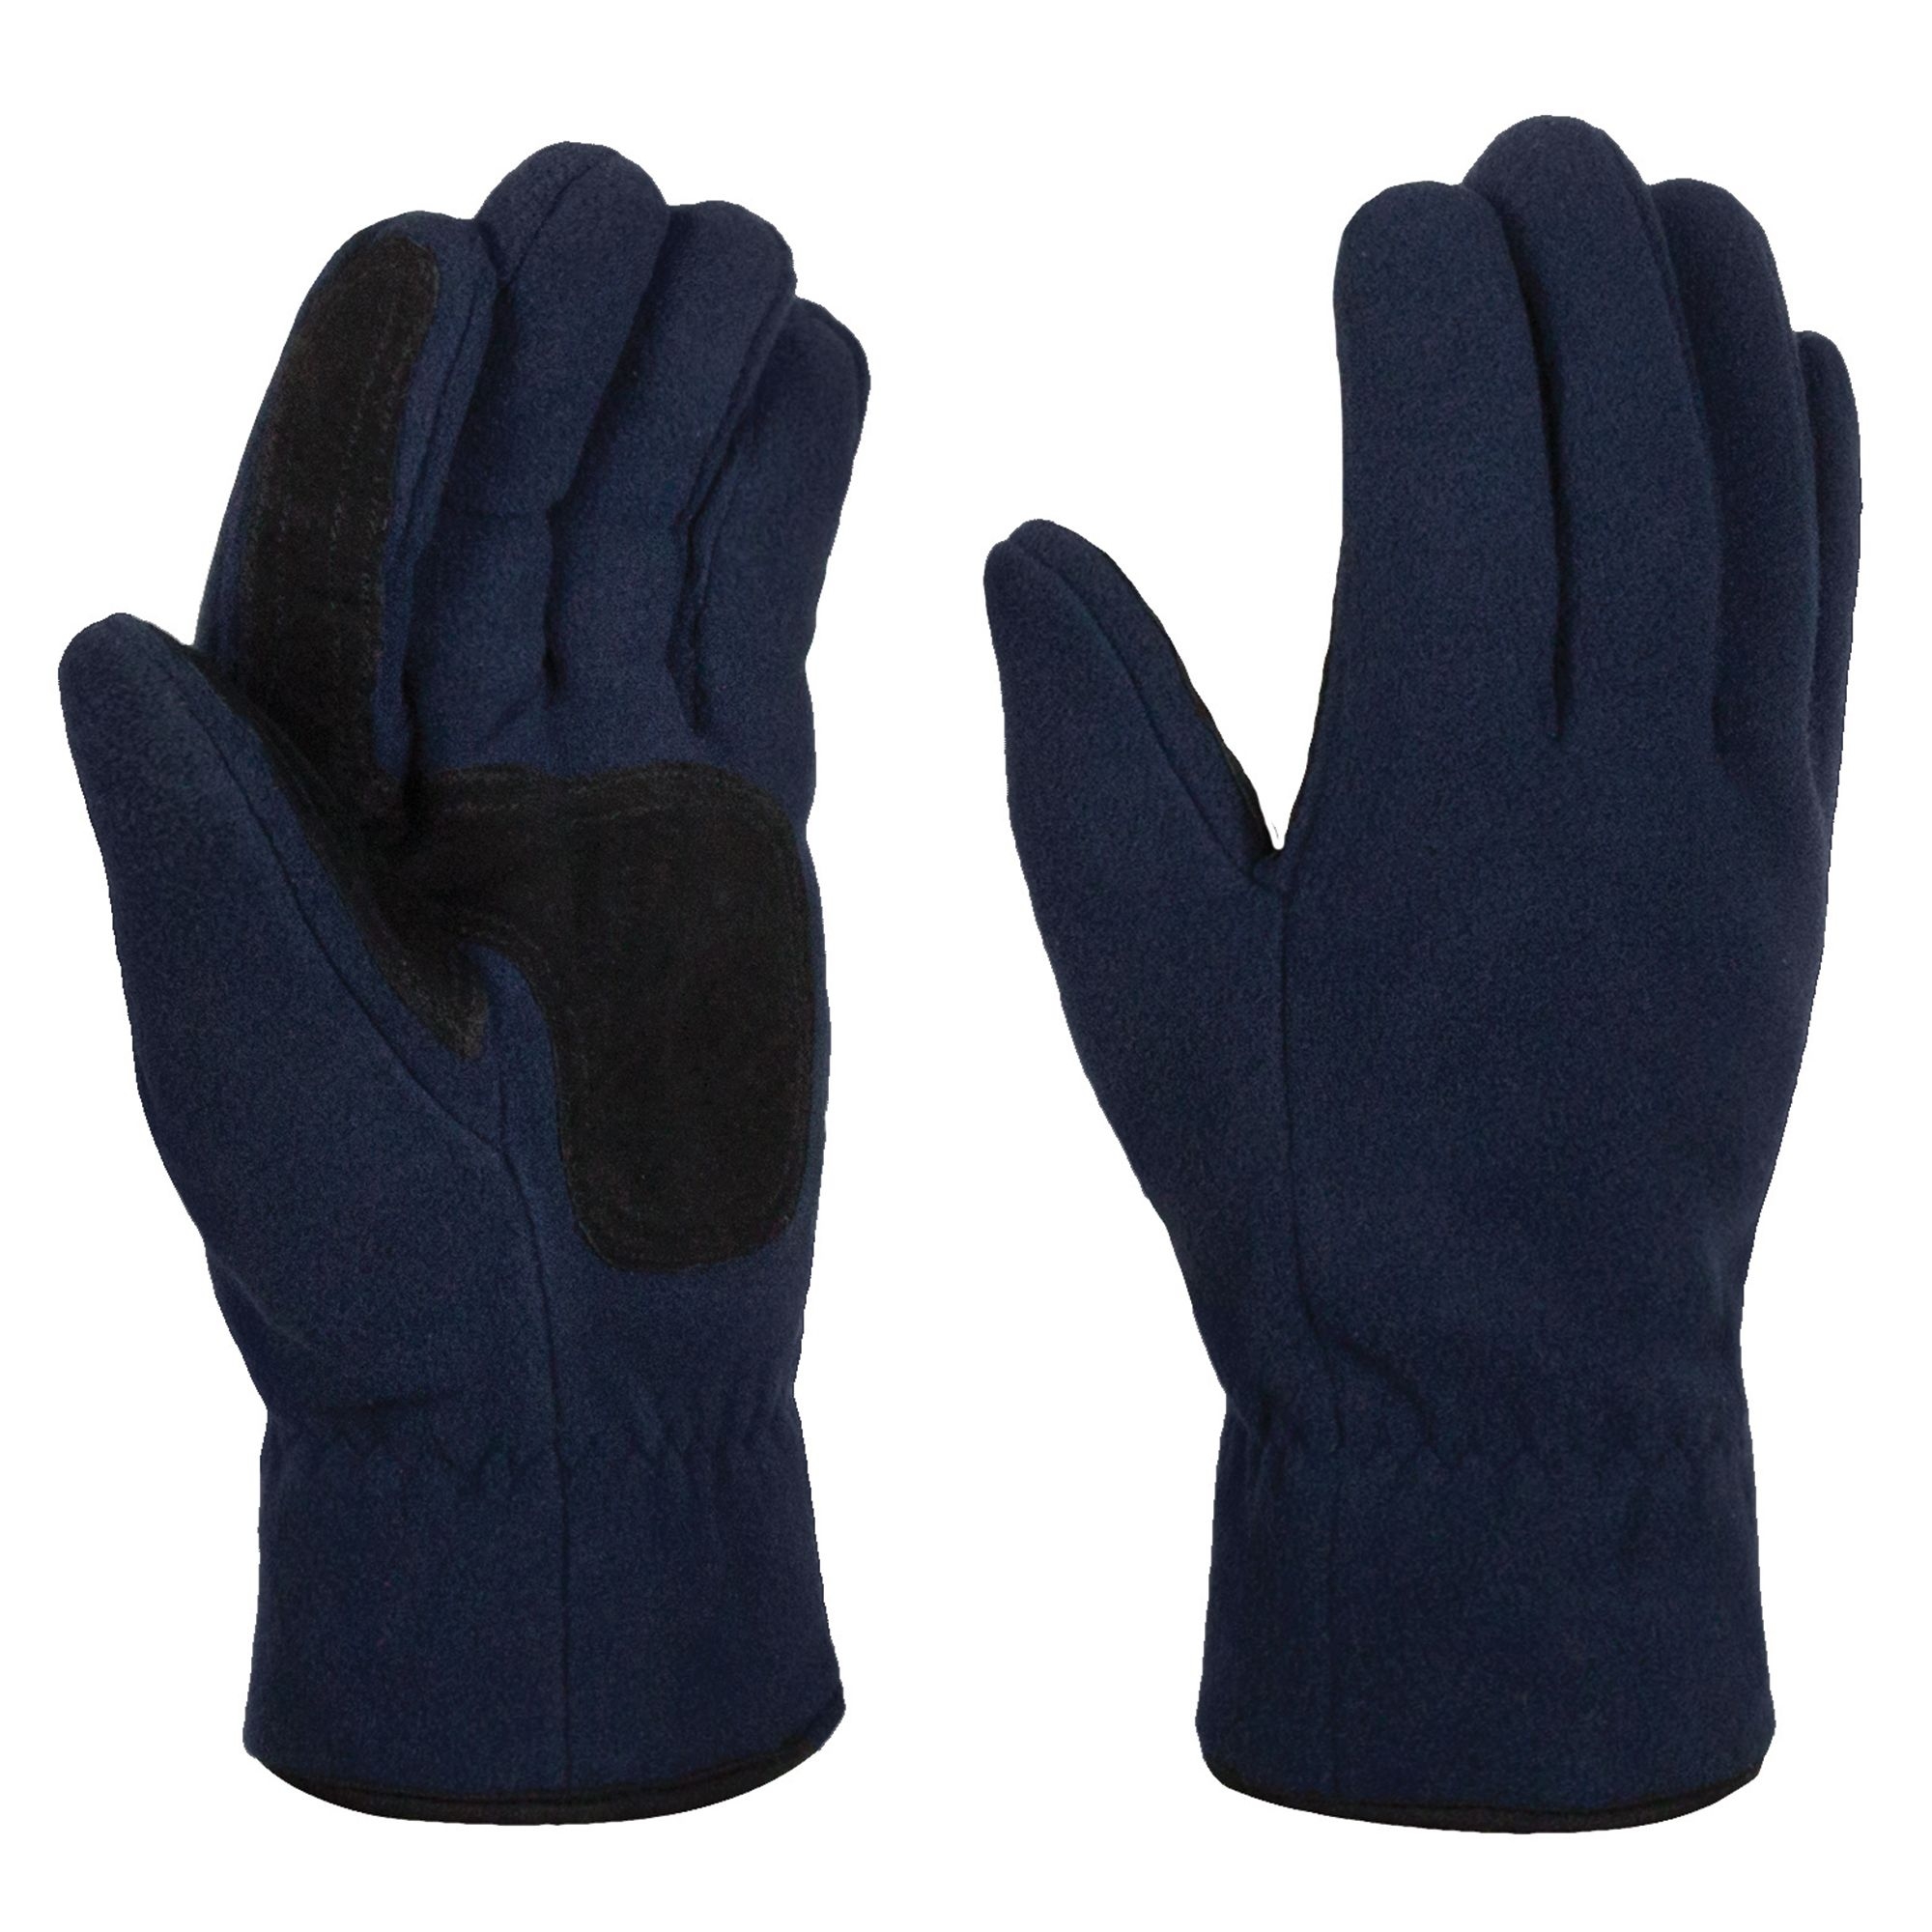 Regatta Thinsulate Fleece Gloves - Navy - S/m